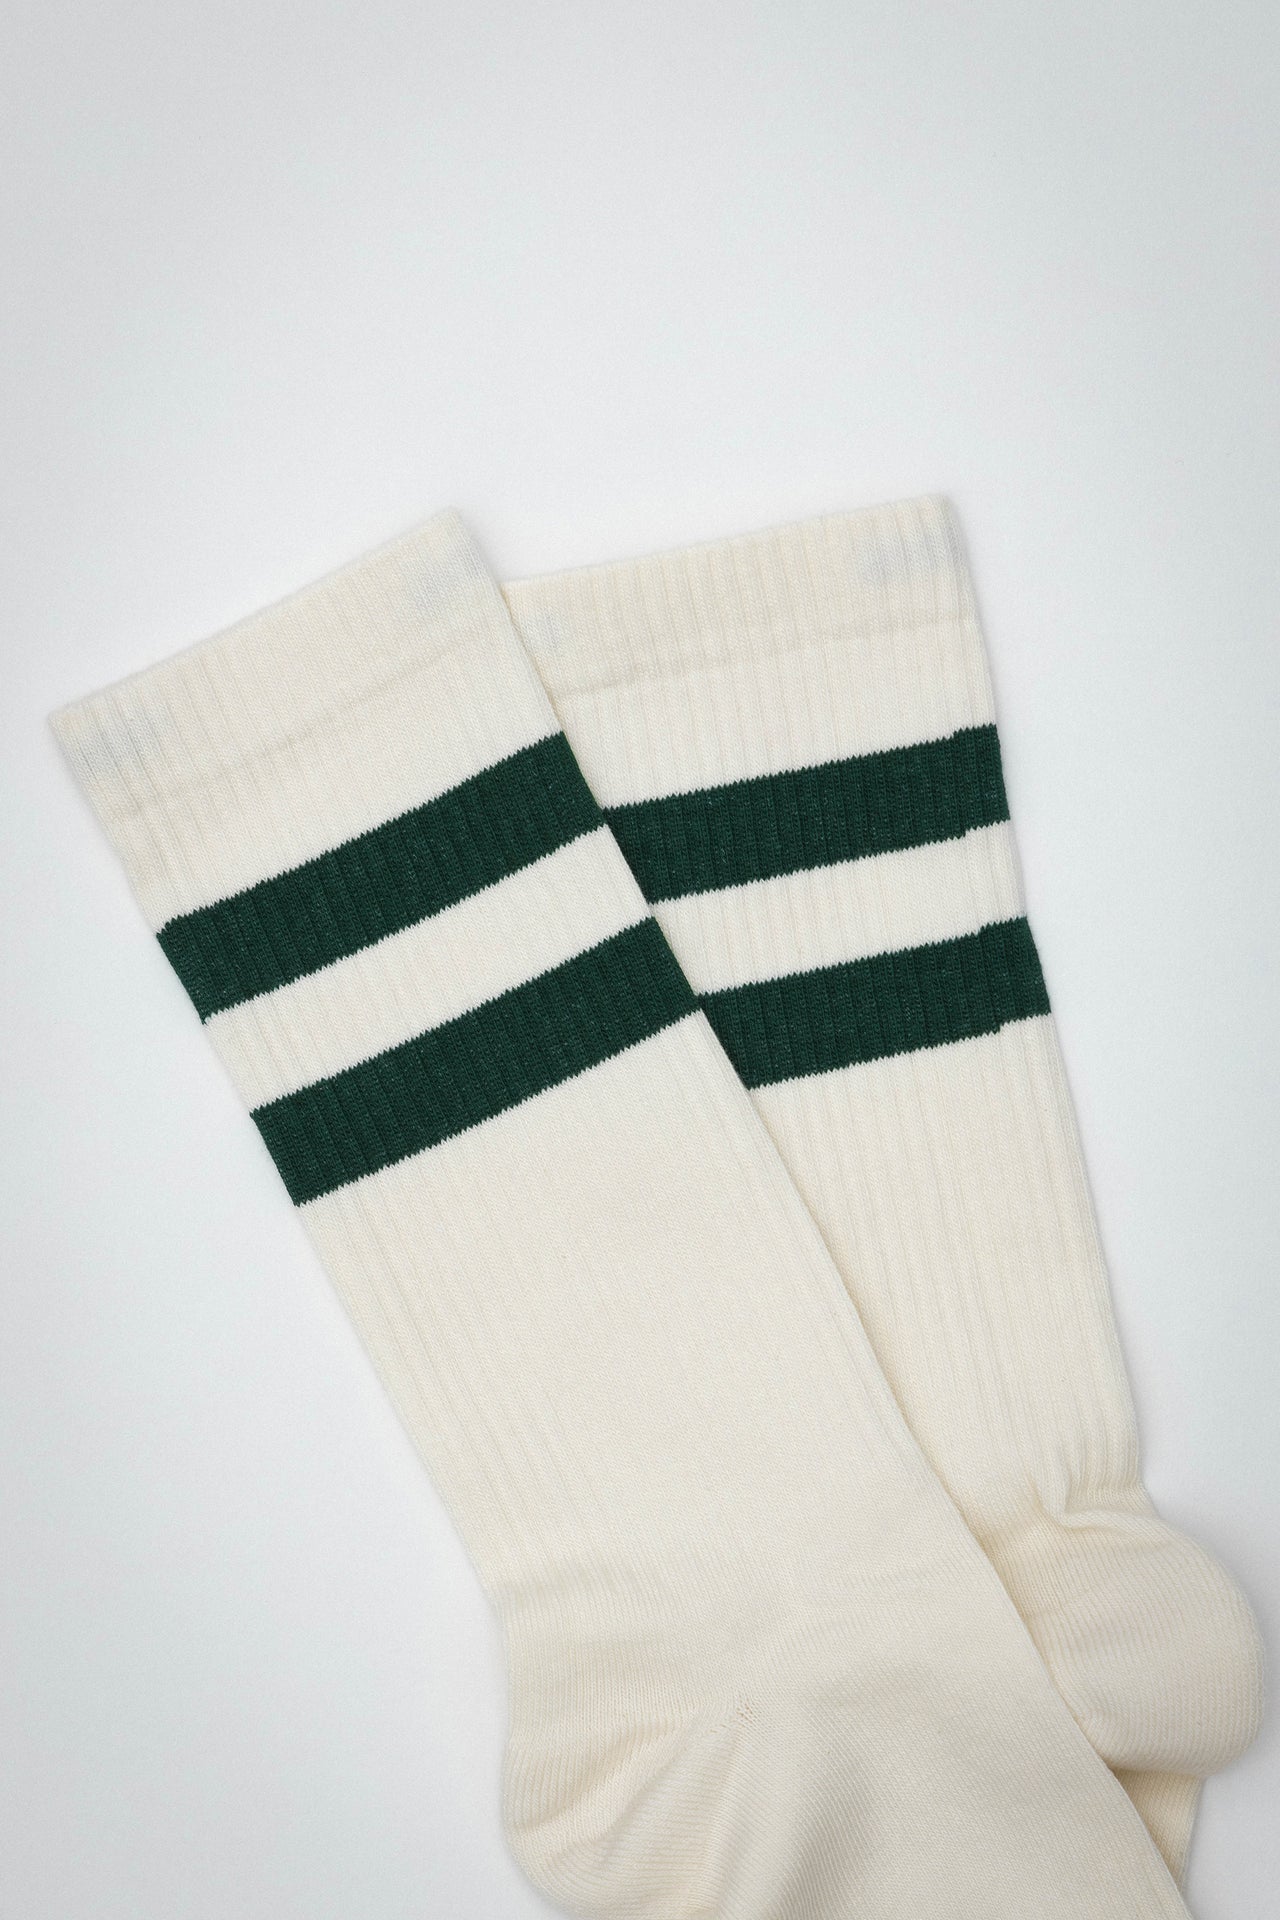 Two Stripe Sock Off White / Green